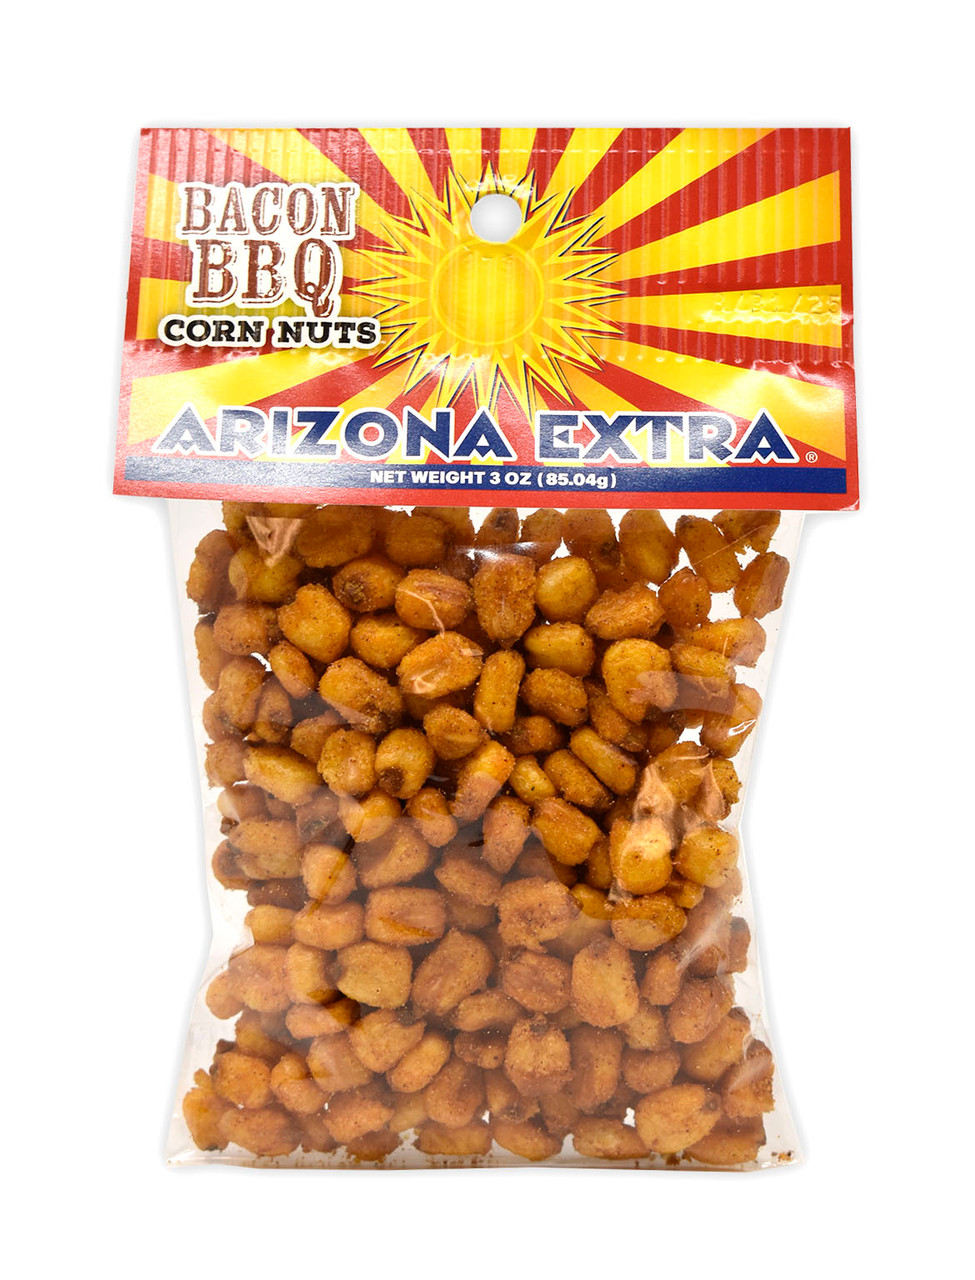 Bacon BBQ Corn Nuts Value Line